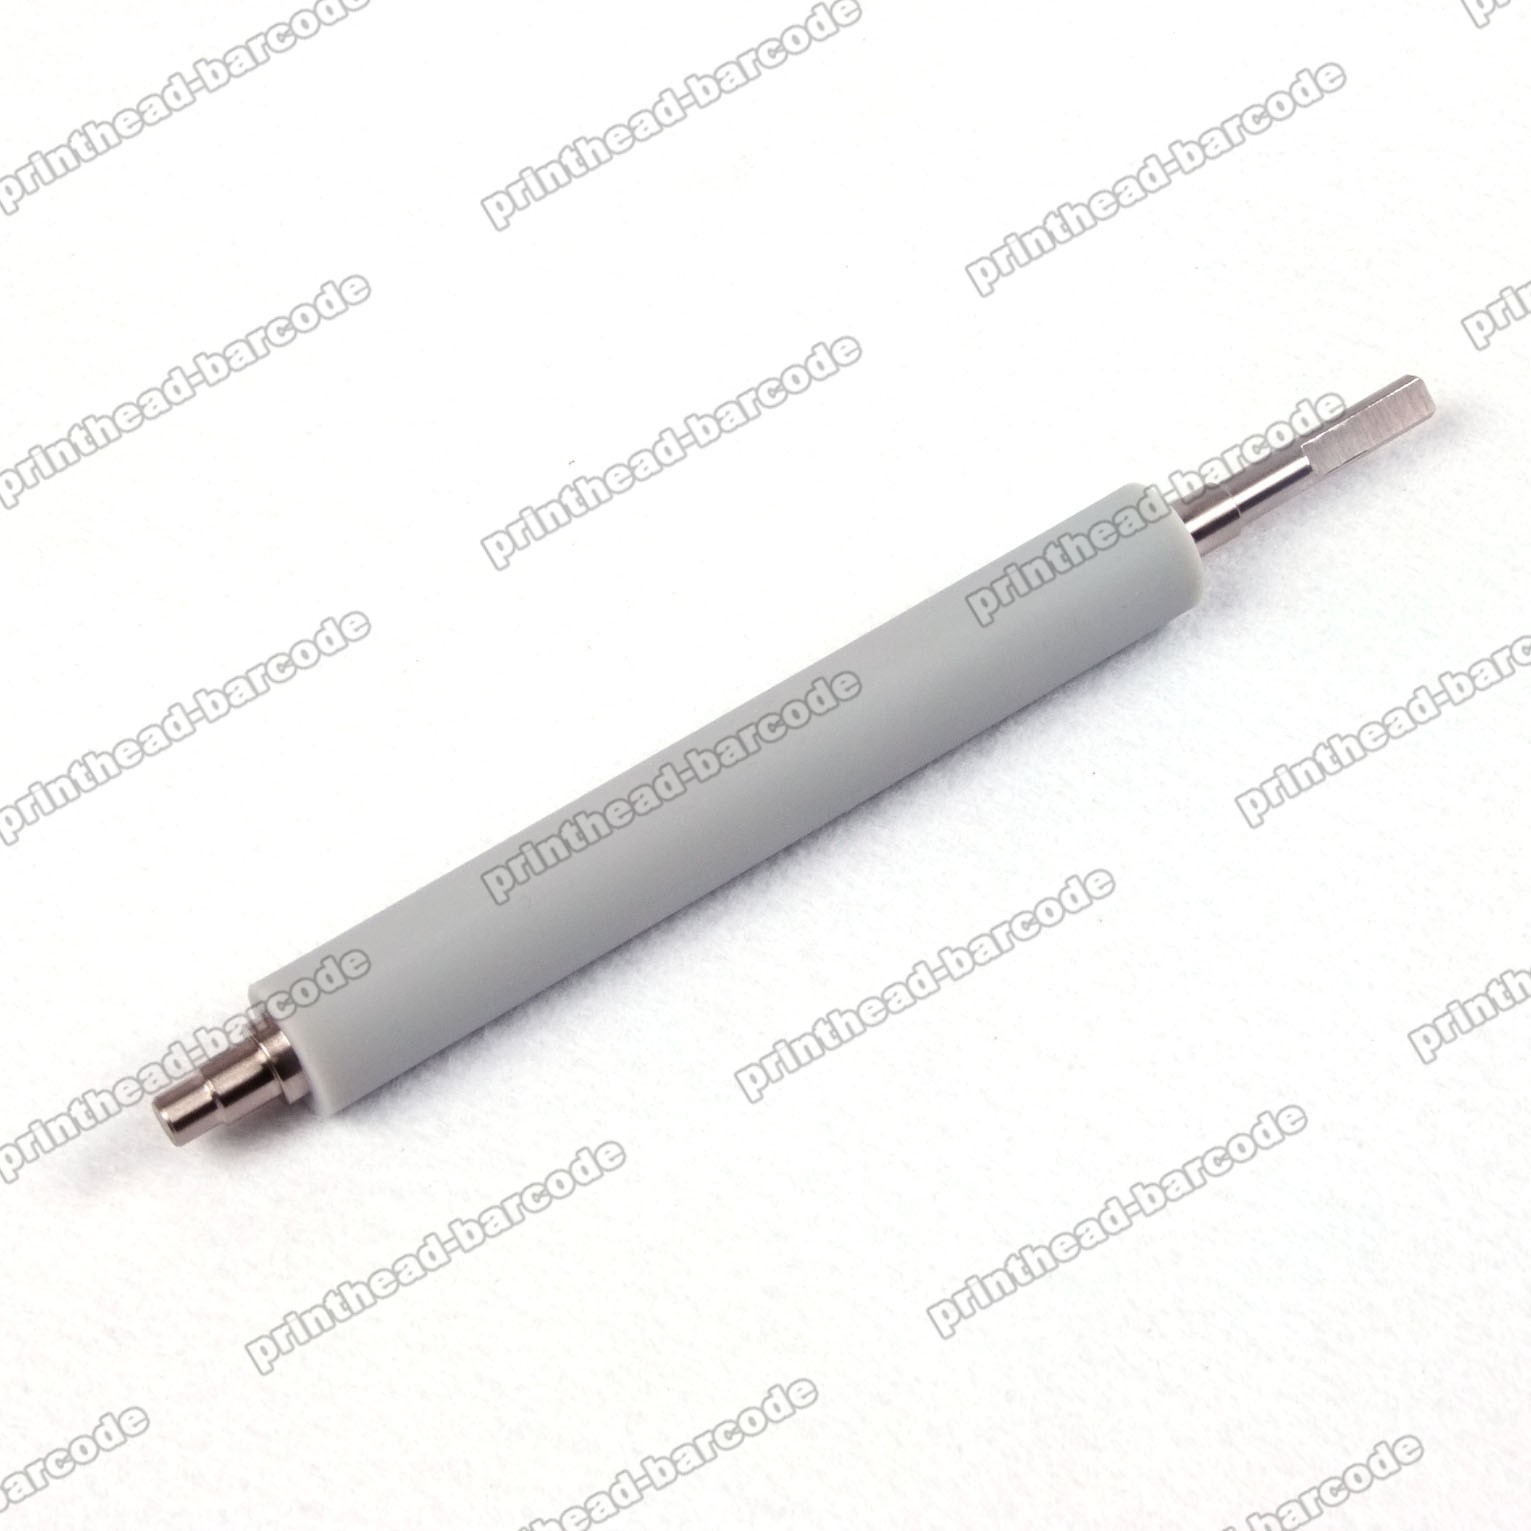 Platen Roller 1-040230-93 Compatible for Intermec PX4i